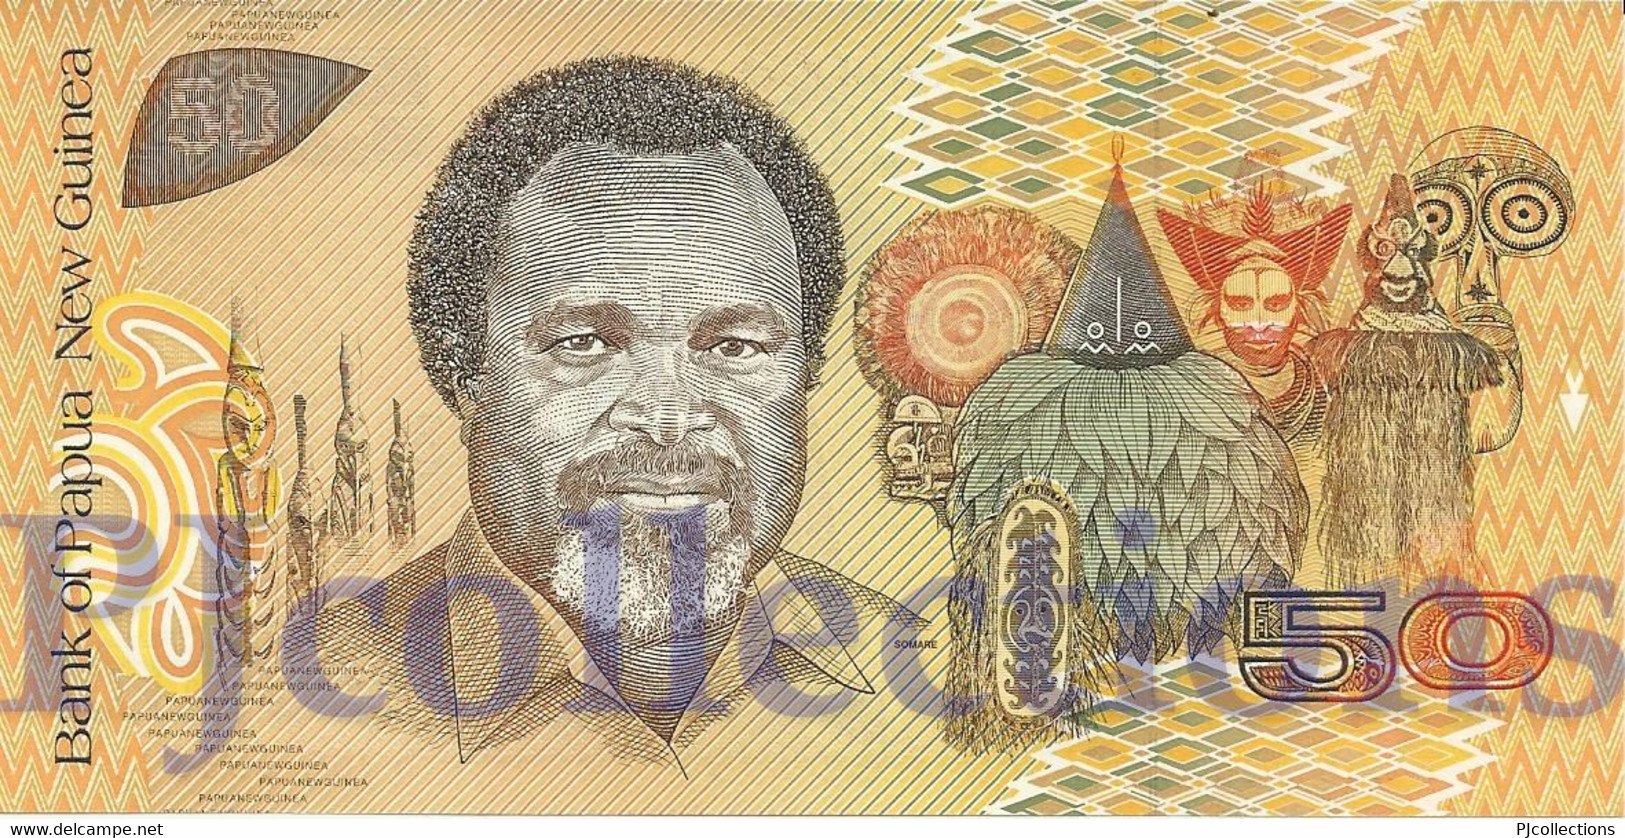 PAPUA NEW GUINEA 50 KINA 1989 PICK 11a UNC - Papua New Guinea